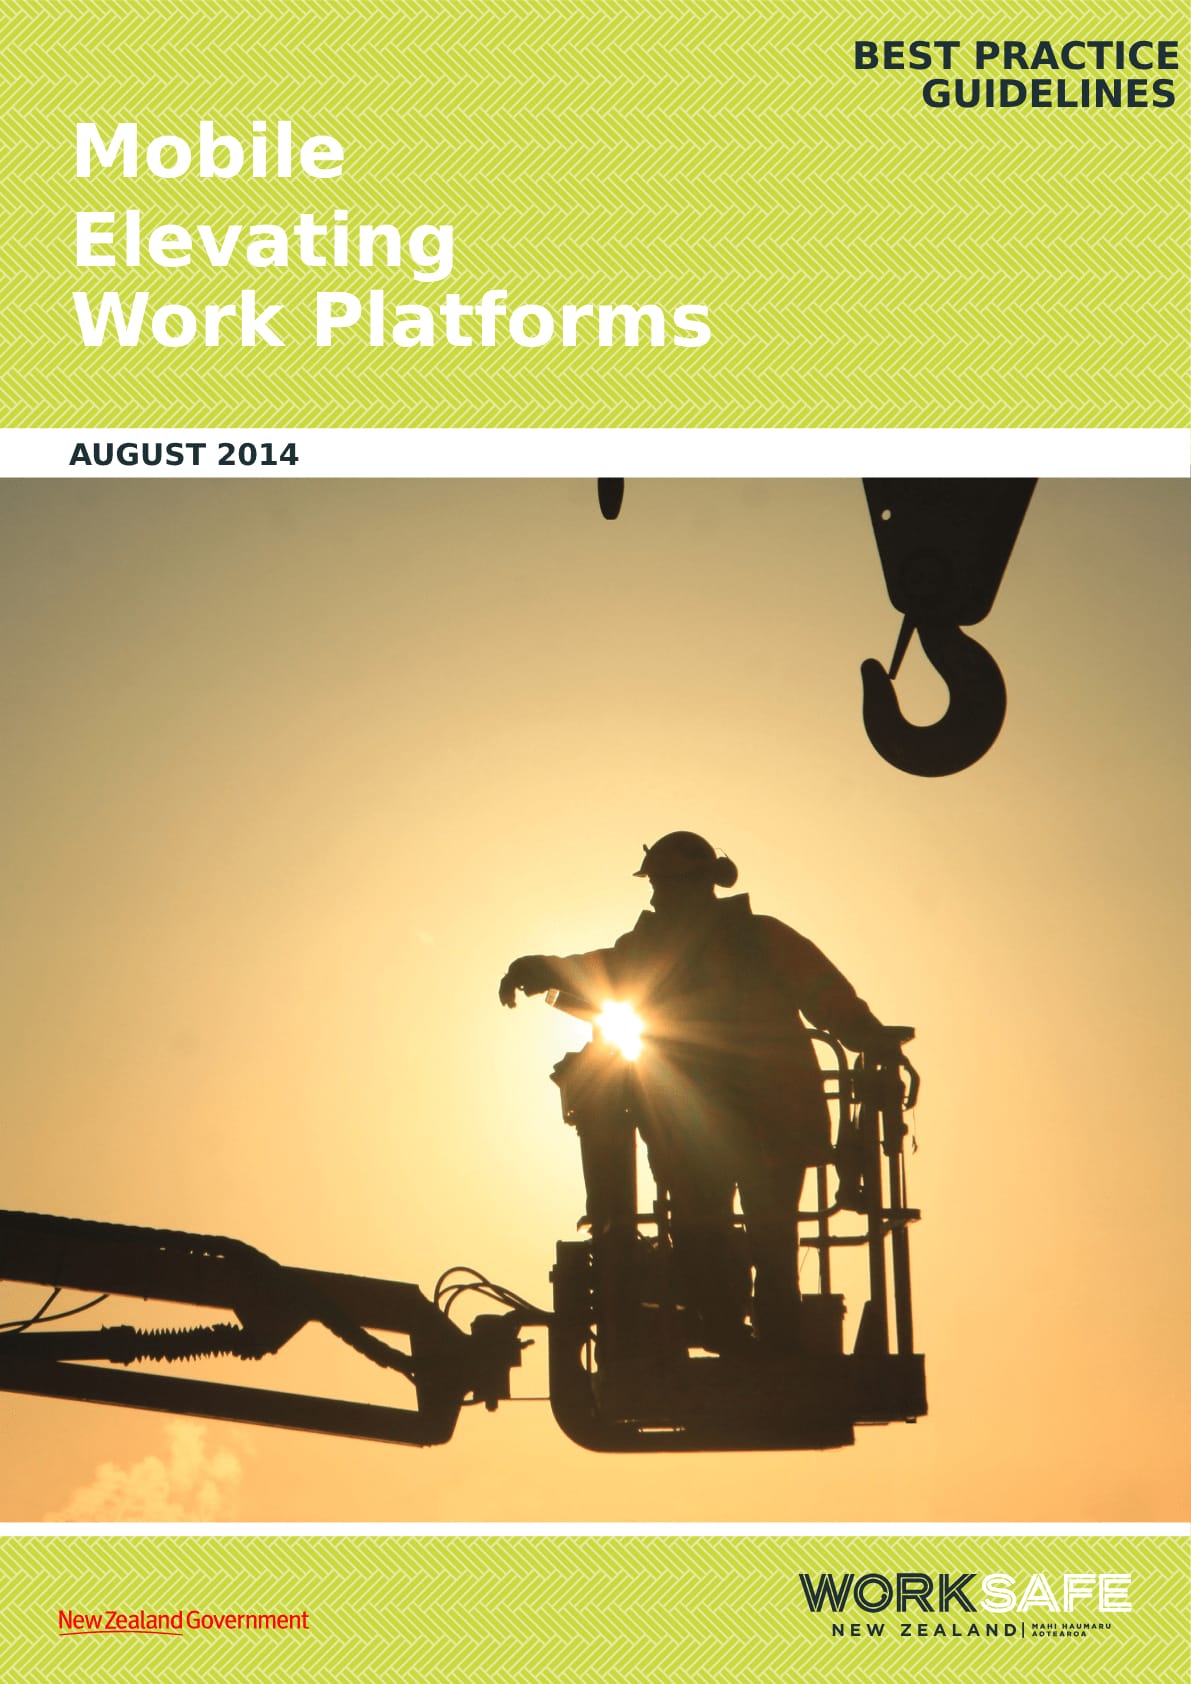 Mobile elevating work platforms guidelines LiftX New Zealand Worksafe